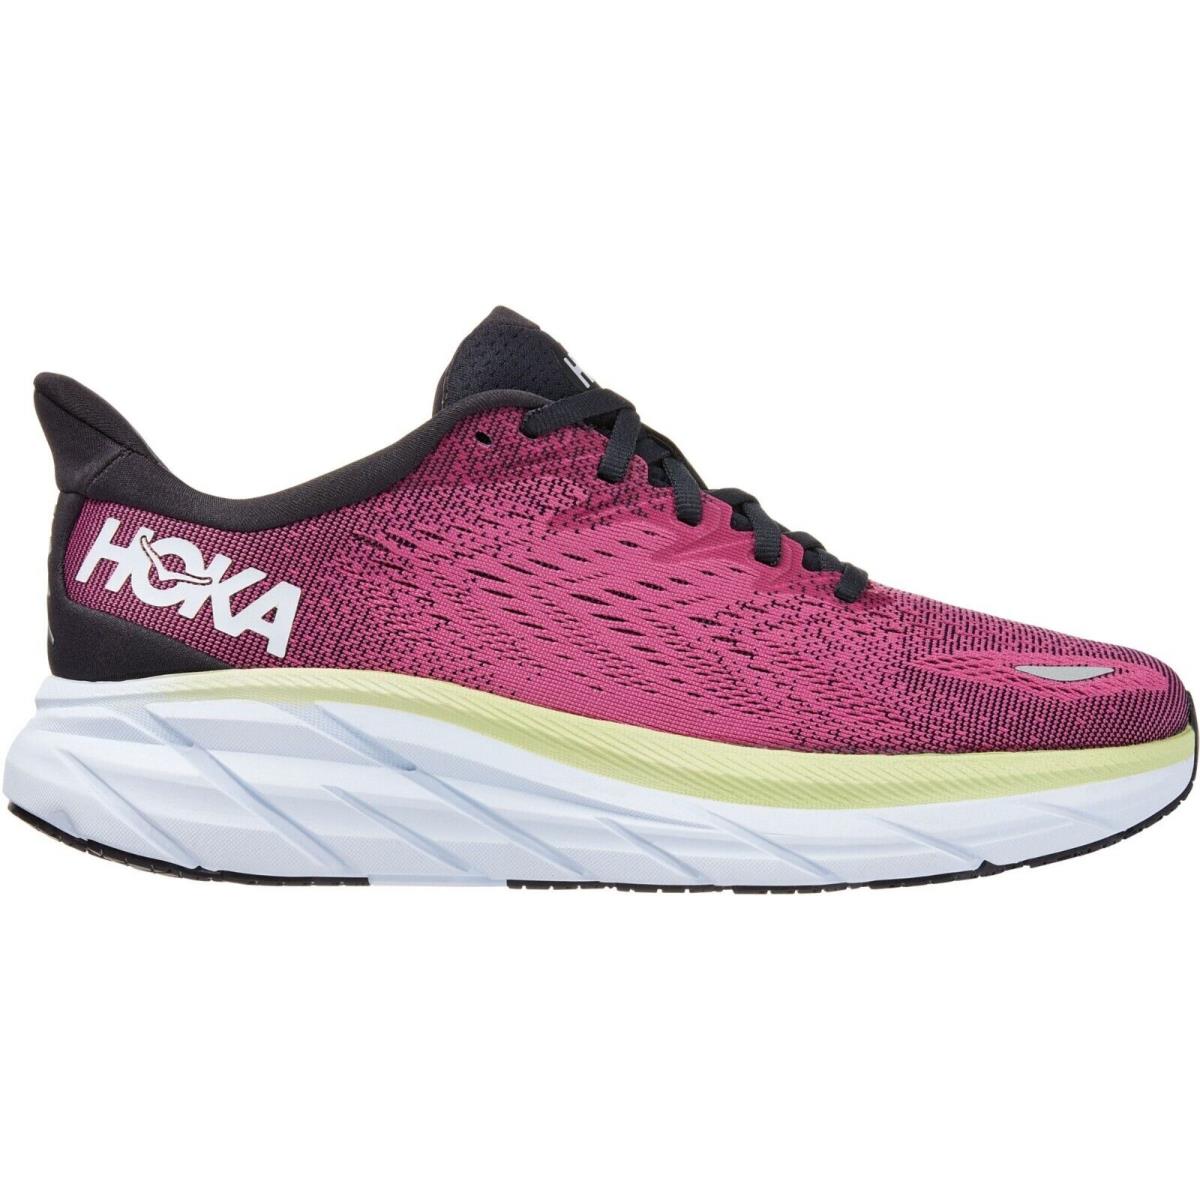 Hoka One One Clifton 8 Women`s Running Shoes Graphite Ibis Rose Sizes 5-12 - Rose